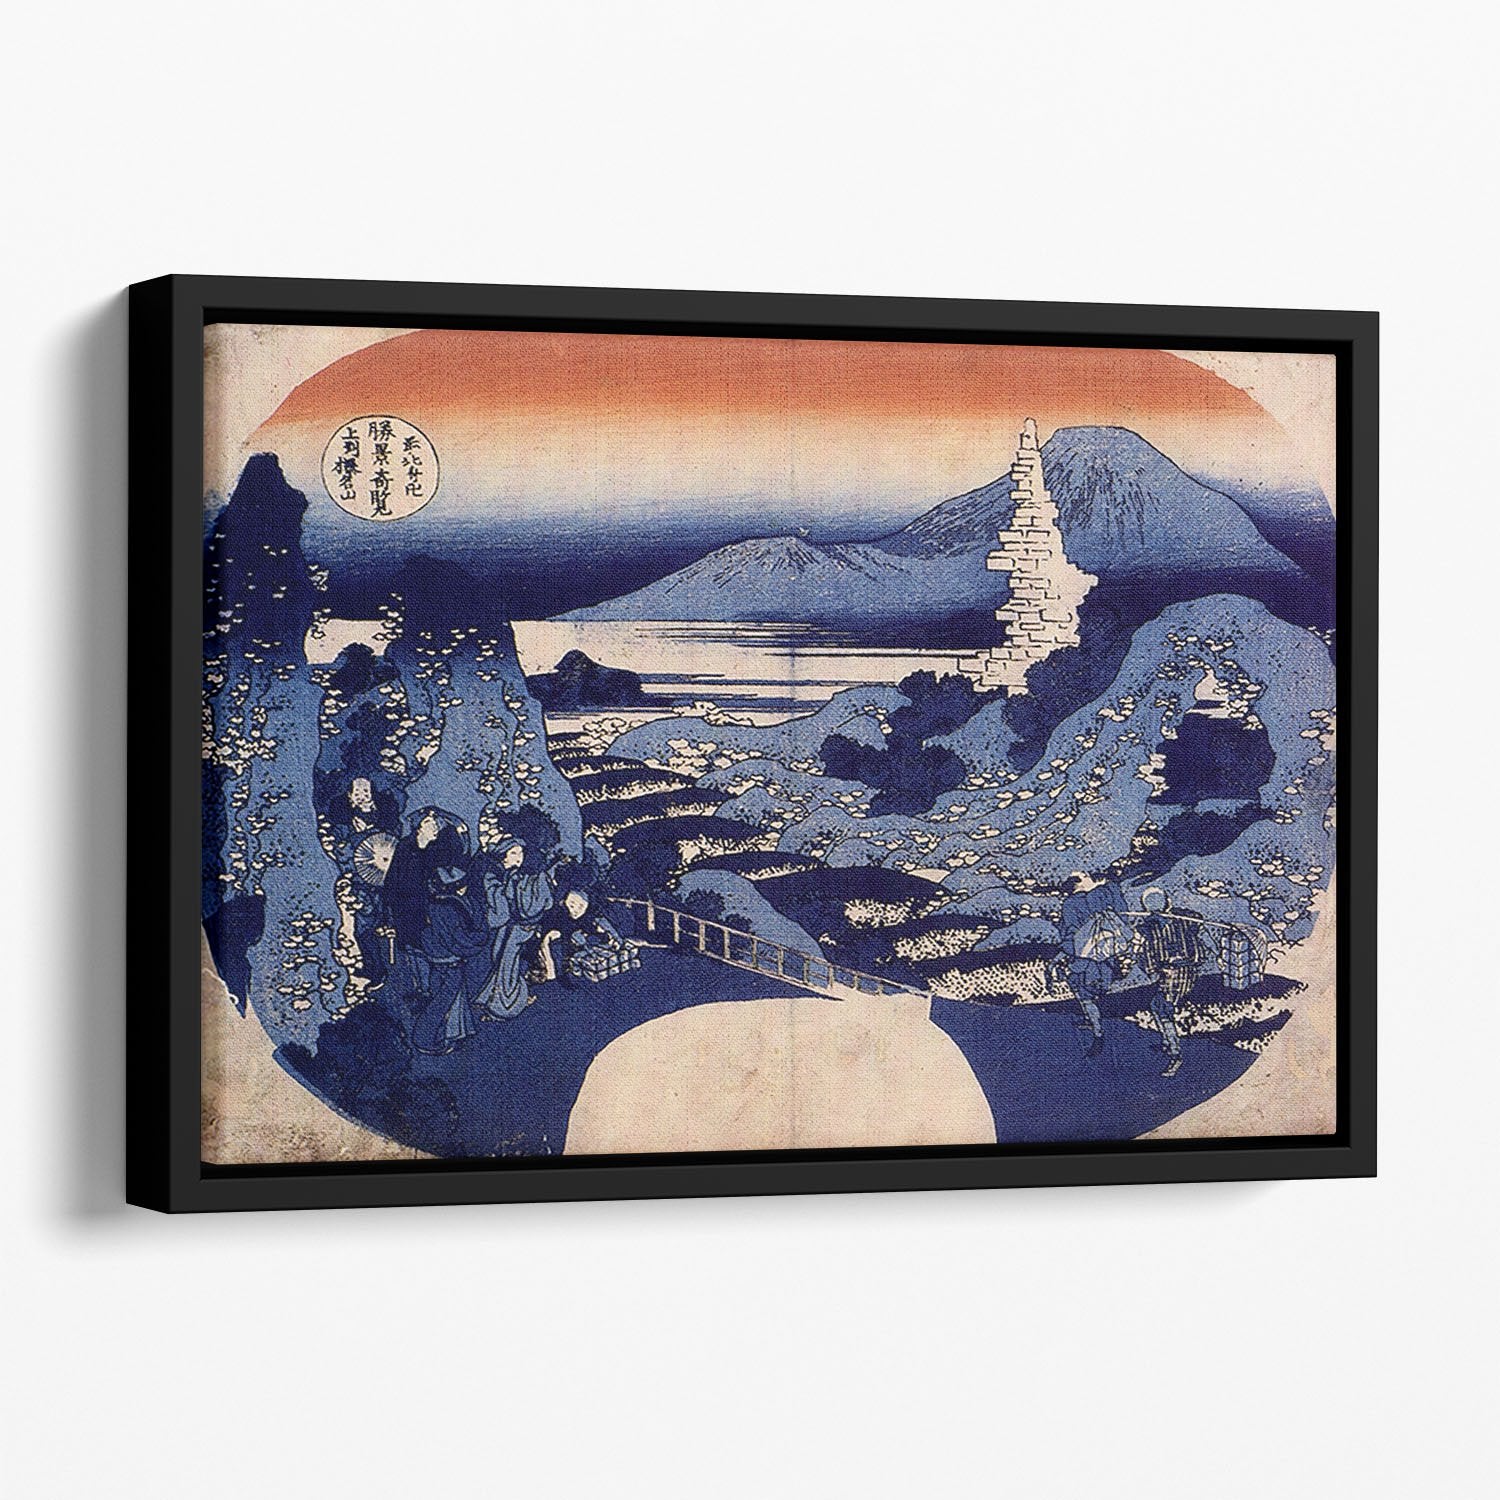 Mount Haruna by Hokusai Floating Framed Canvas